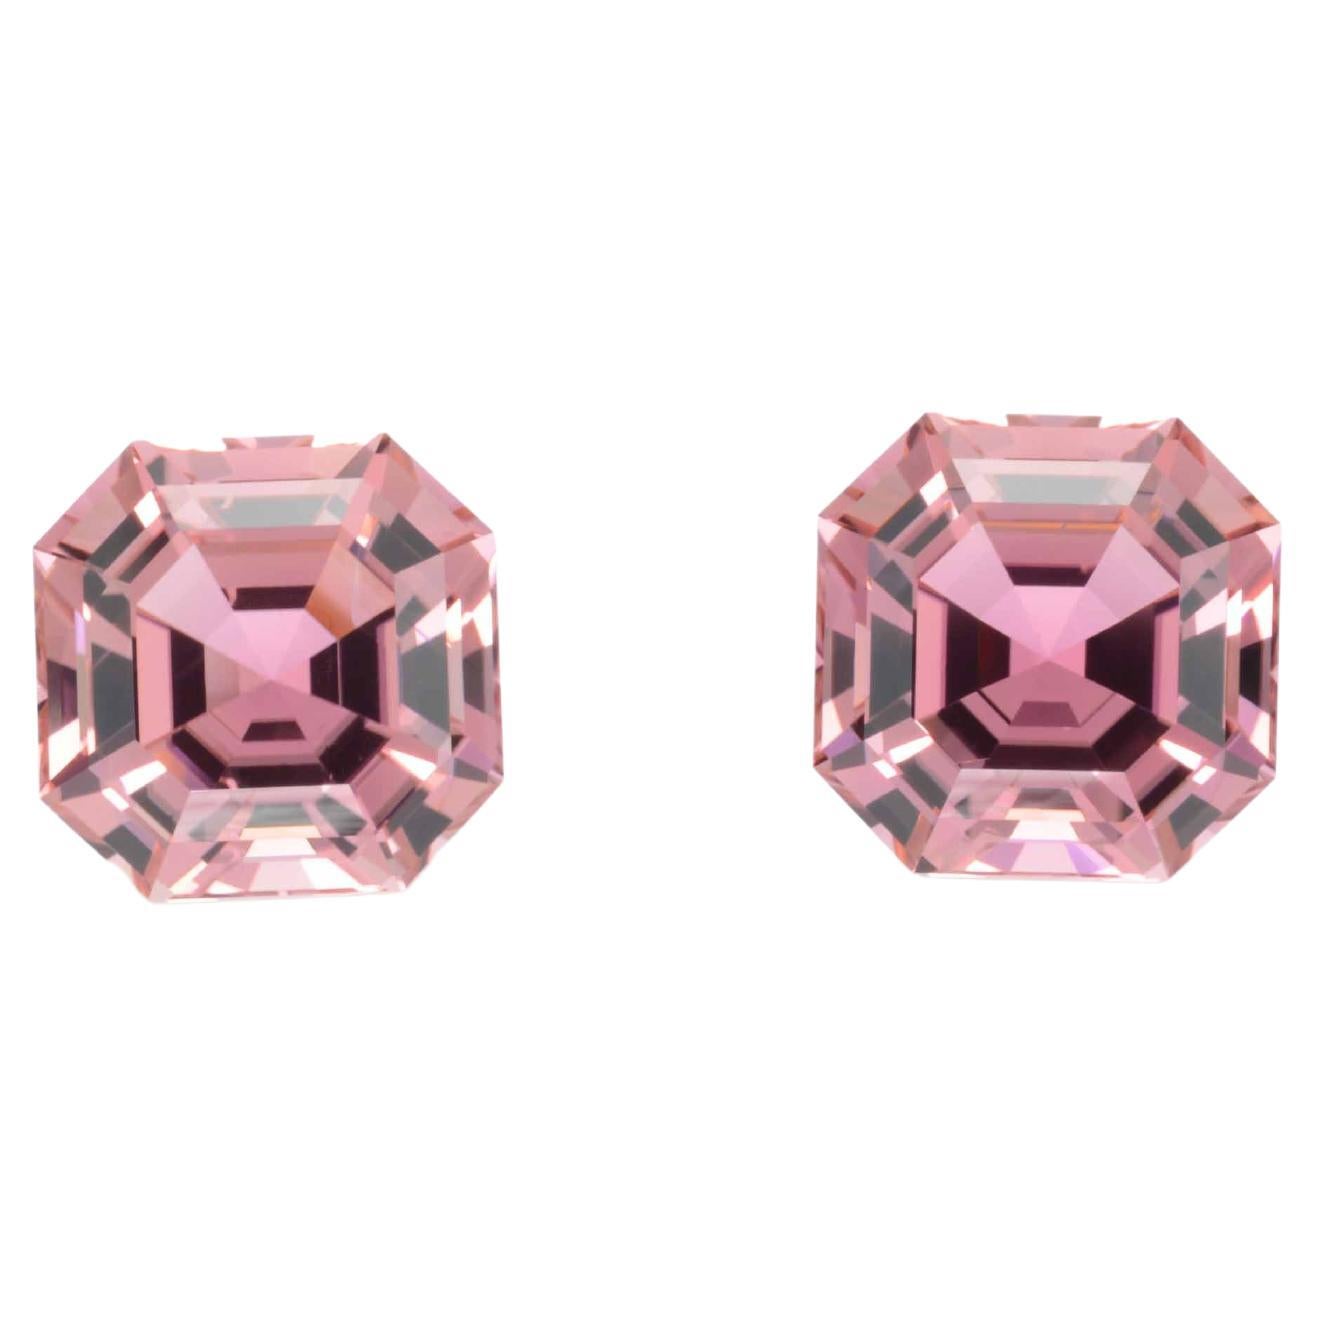 Art Deco Pink Tourmaline Earring Gemstones 11.01 Carat Square Octagon Loose Gems